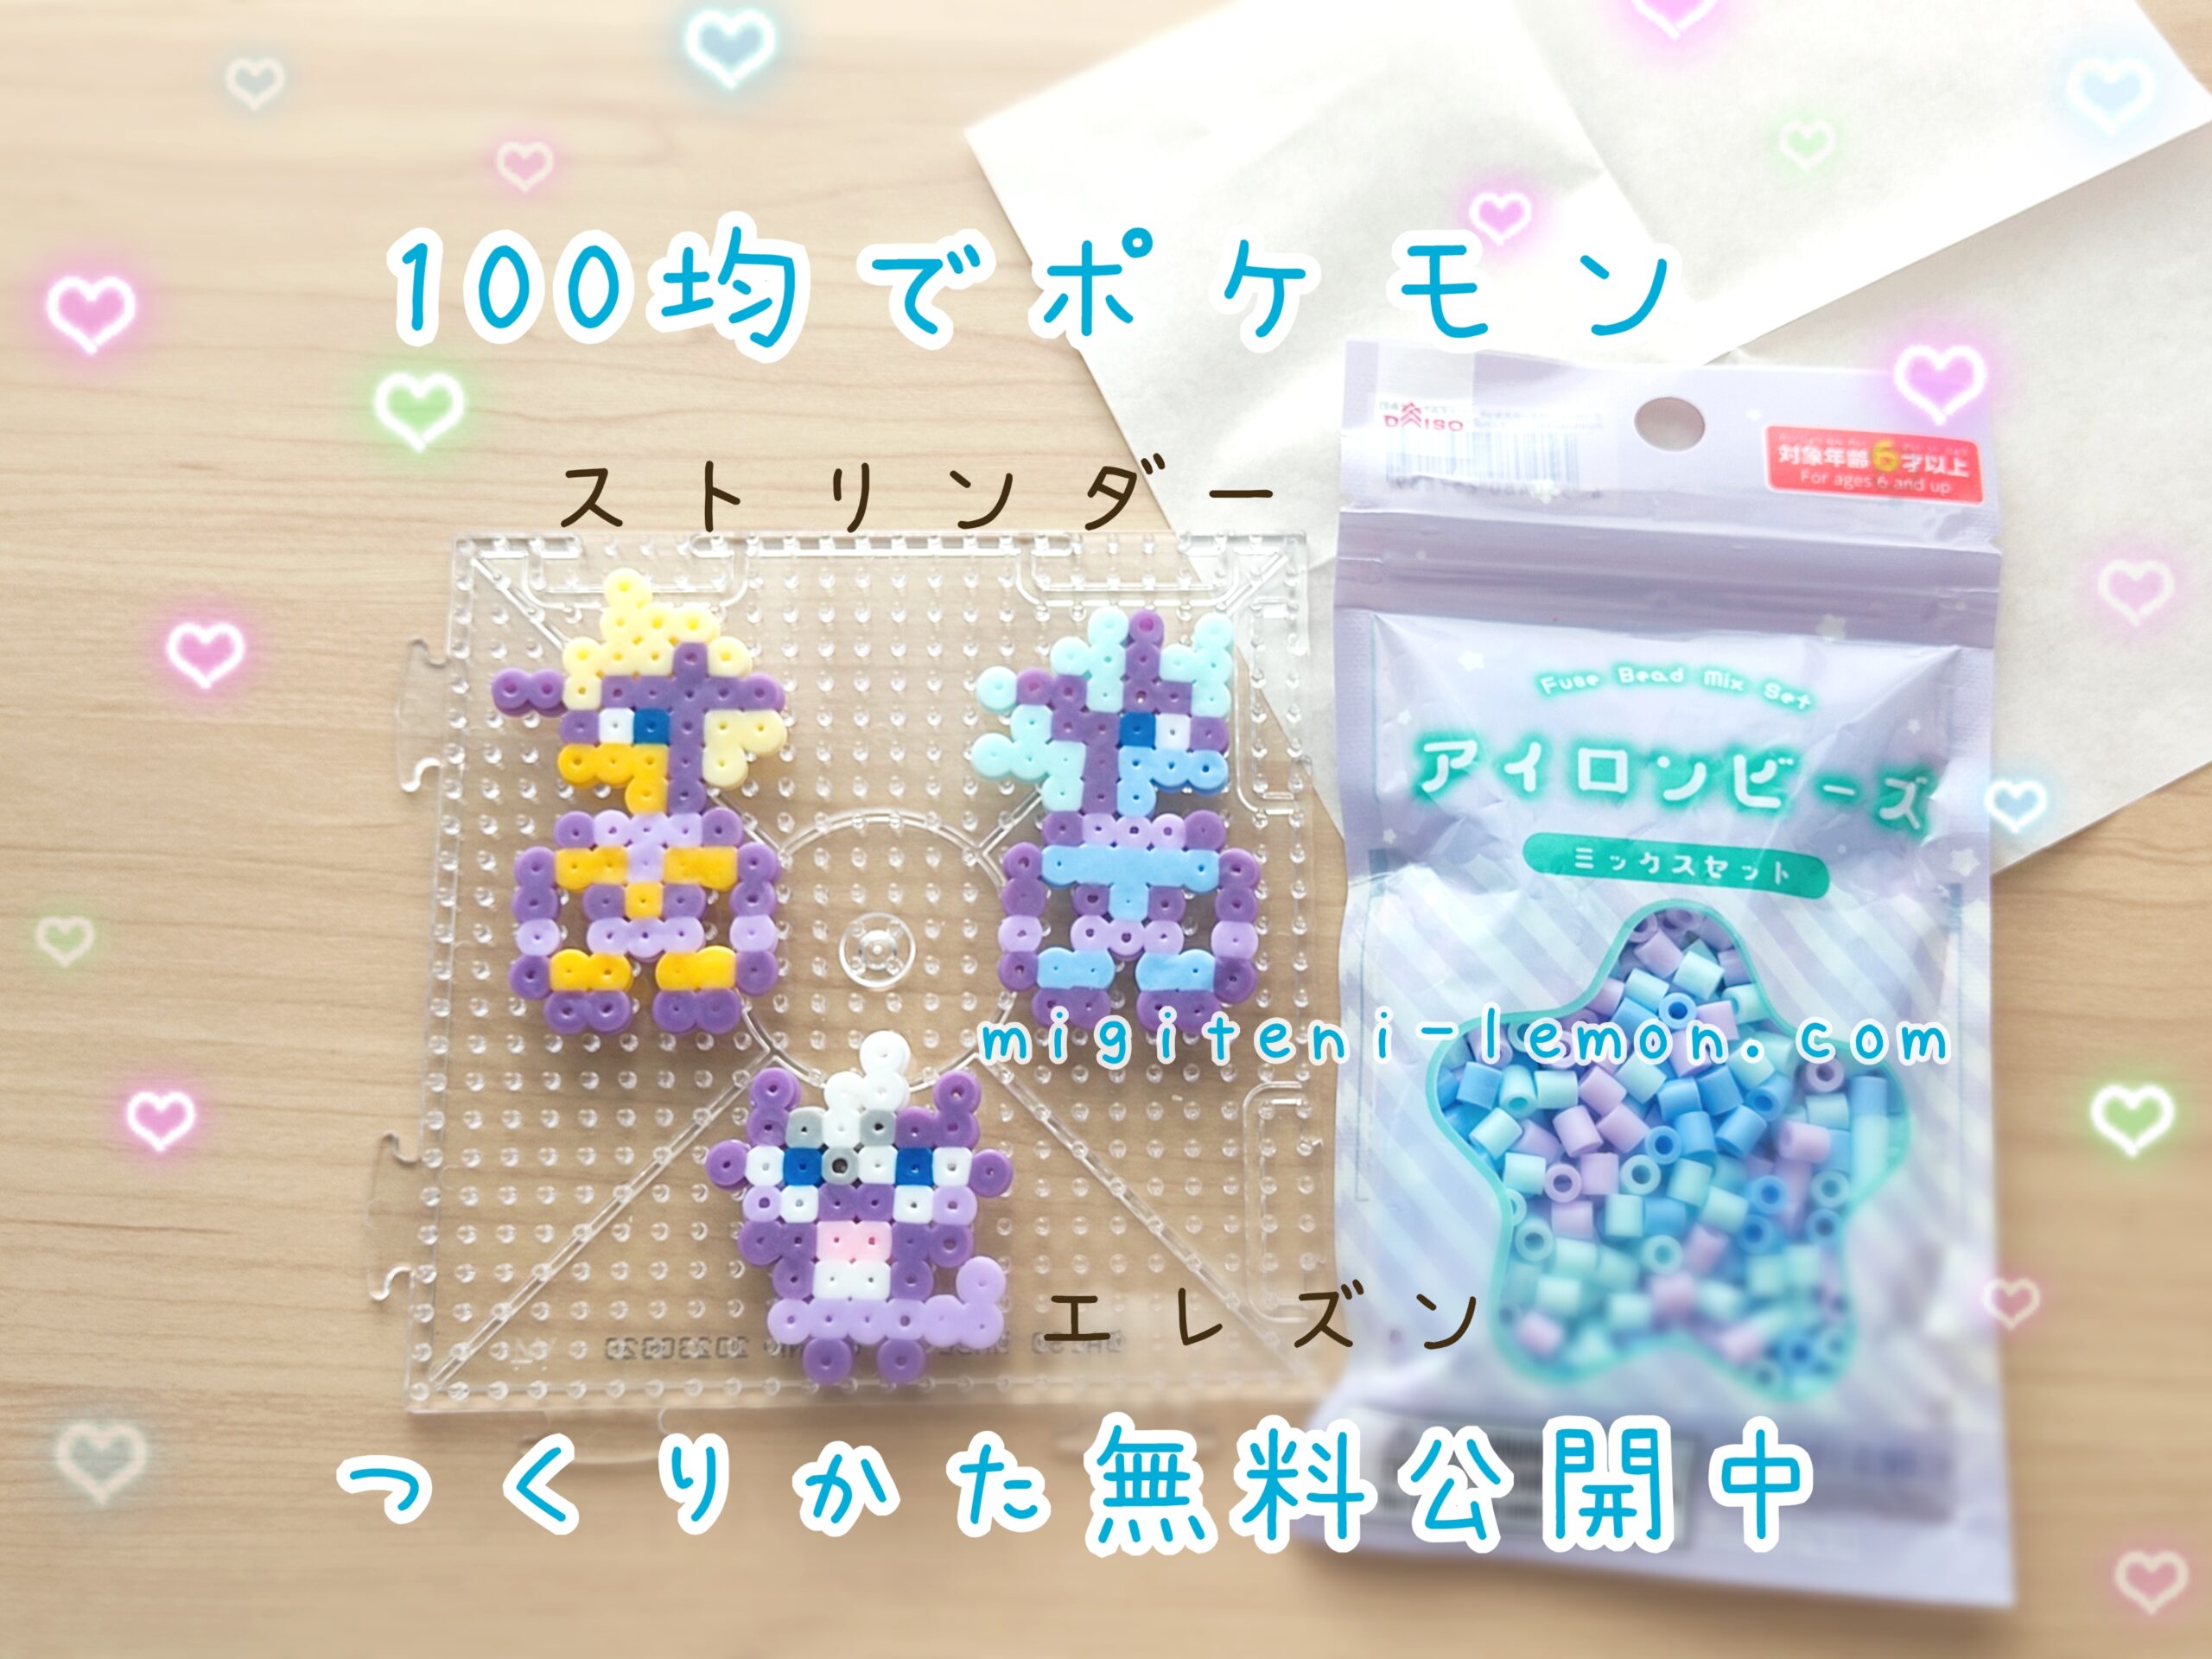 eleson-toxel-pokemon-beads-zuan